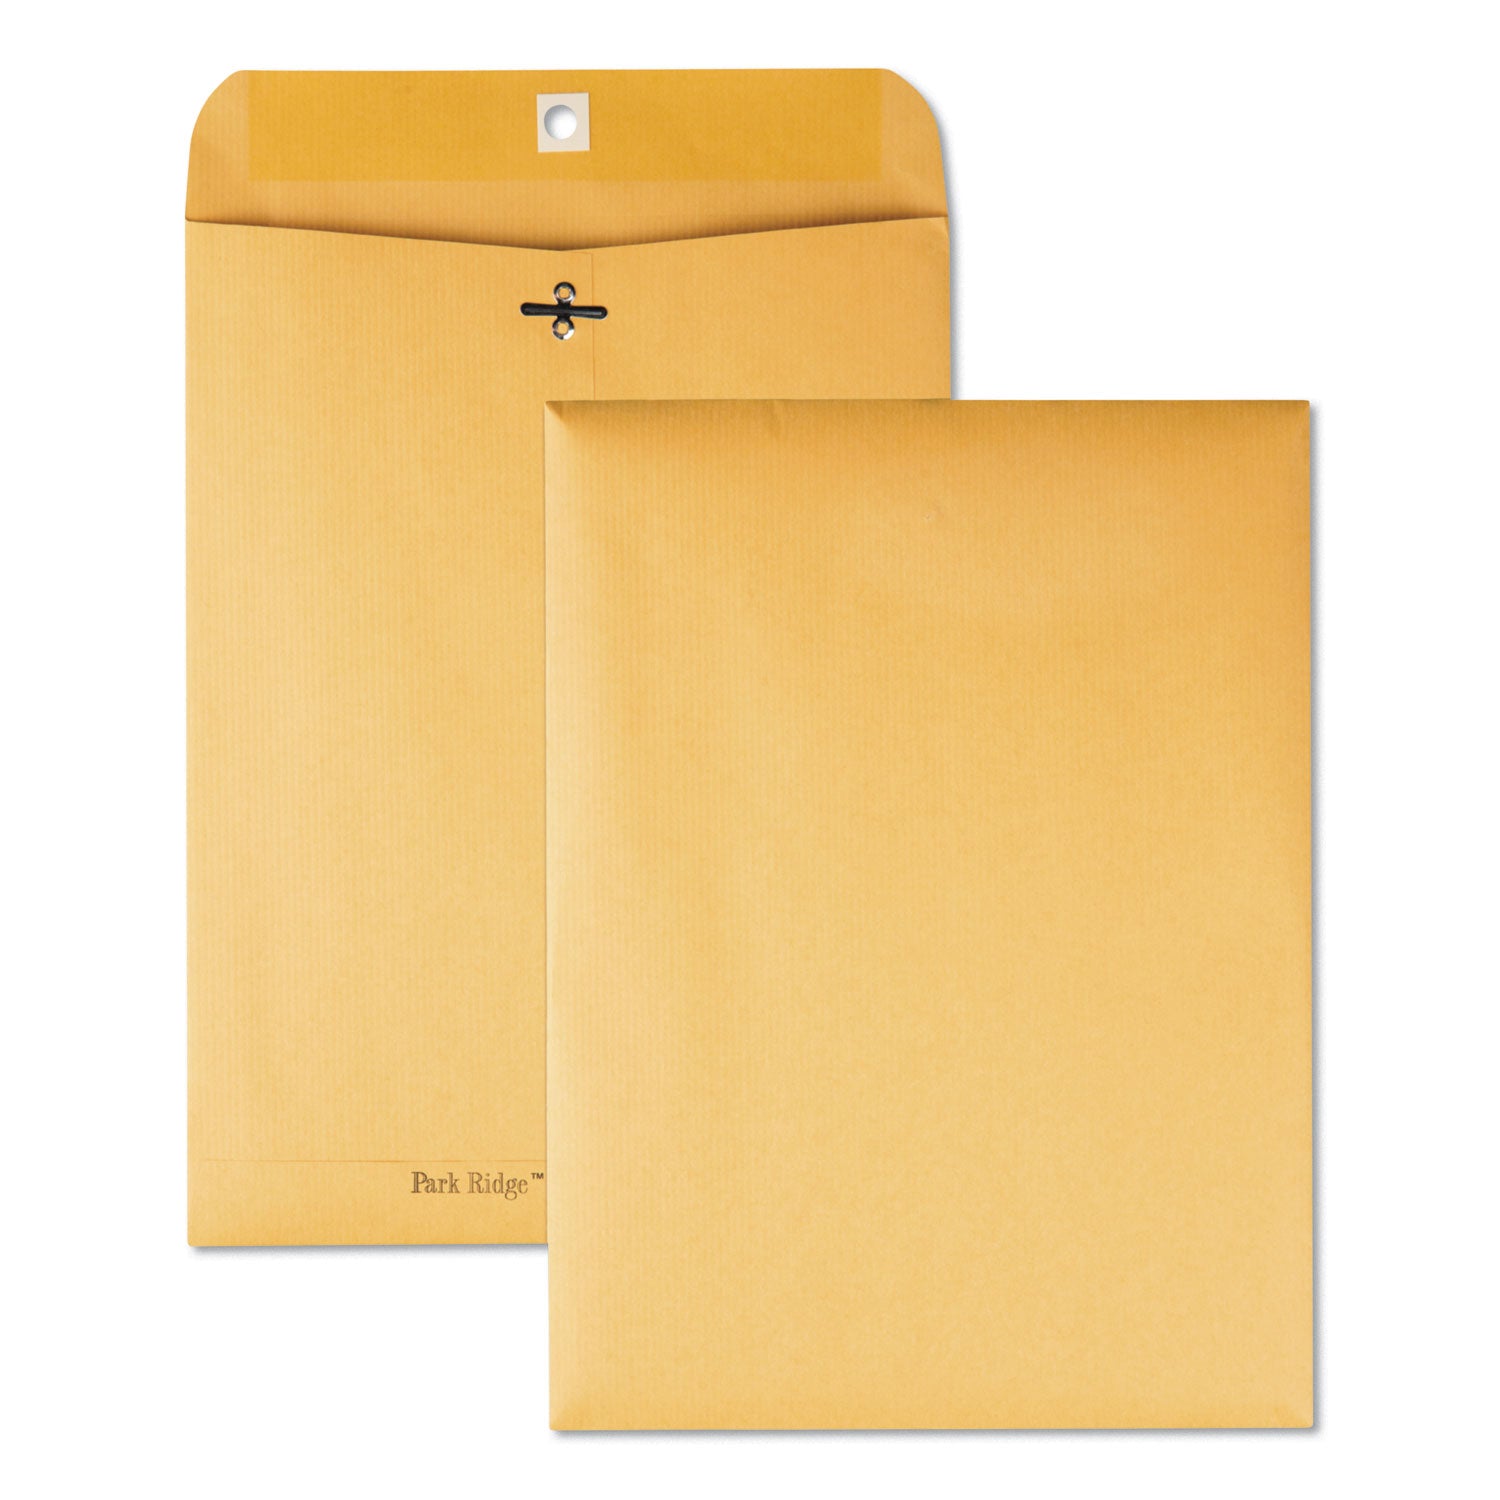 Park Ridge Kraft Clasp Envelope, #90, Square Flap, Clasp/Gummed Closure, 9 x 12, Brown Kraft, 100/Box - 